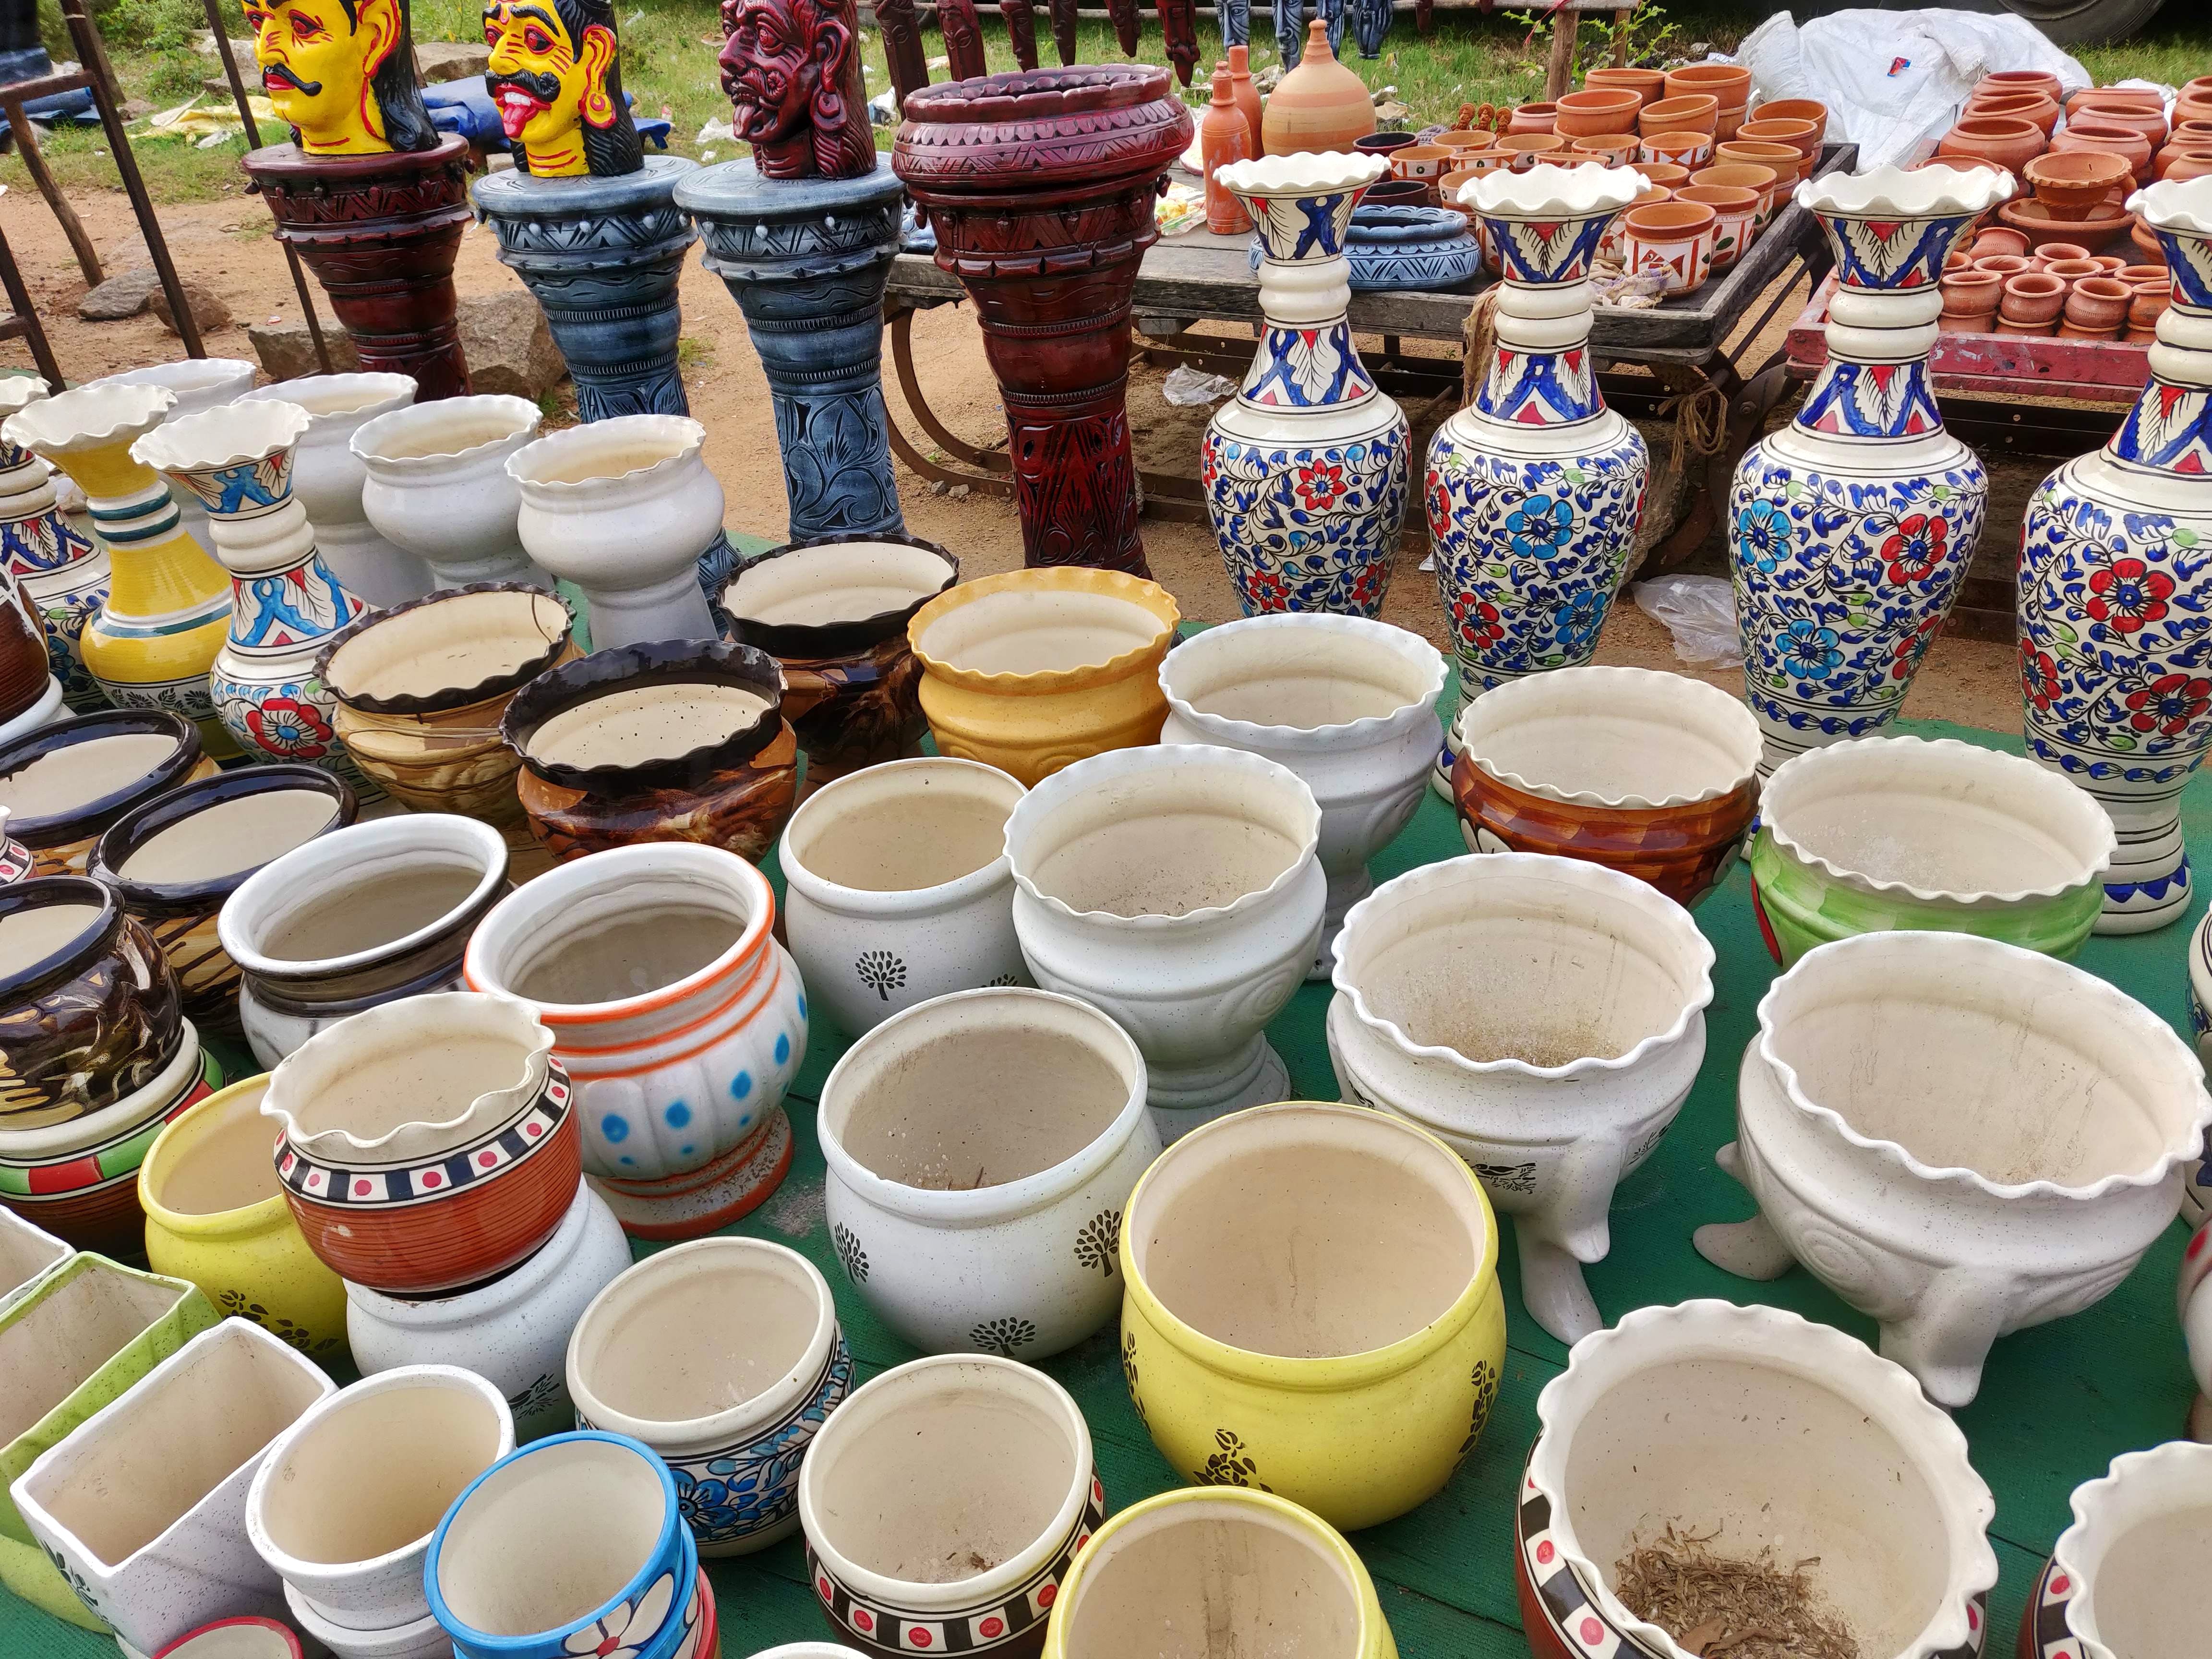 Drum,Ceramic,Musical instrument,earthenware,Percussion,Hand drum,Membranophone,Pottery,Bongo drum